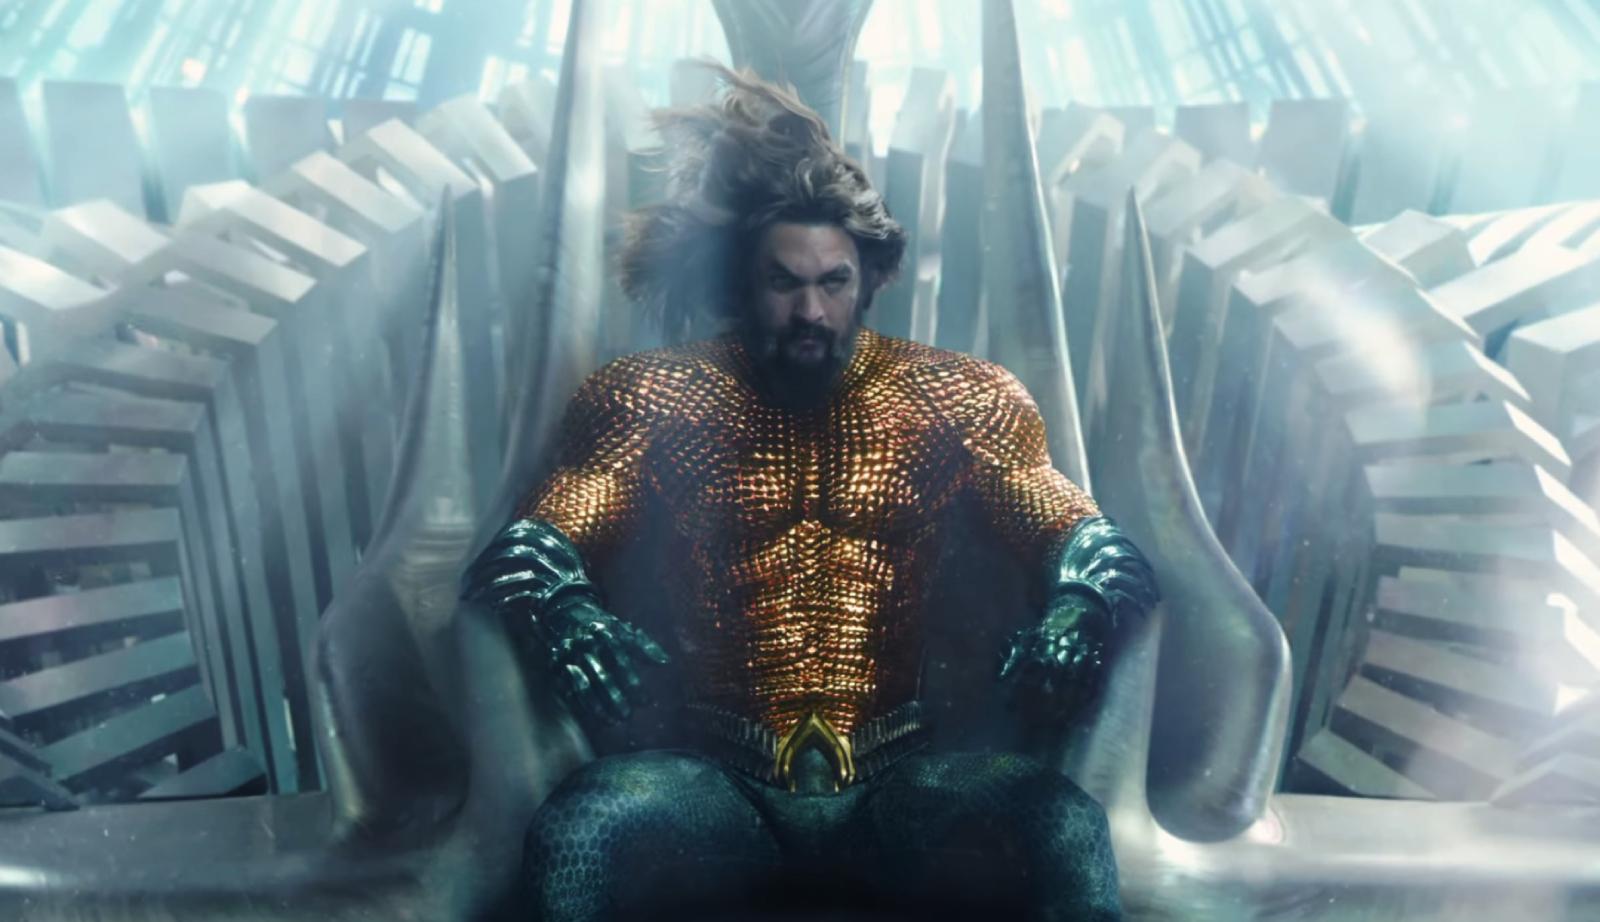 Aquaman and The Lost Kingdom